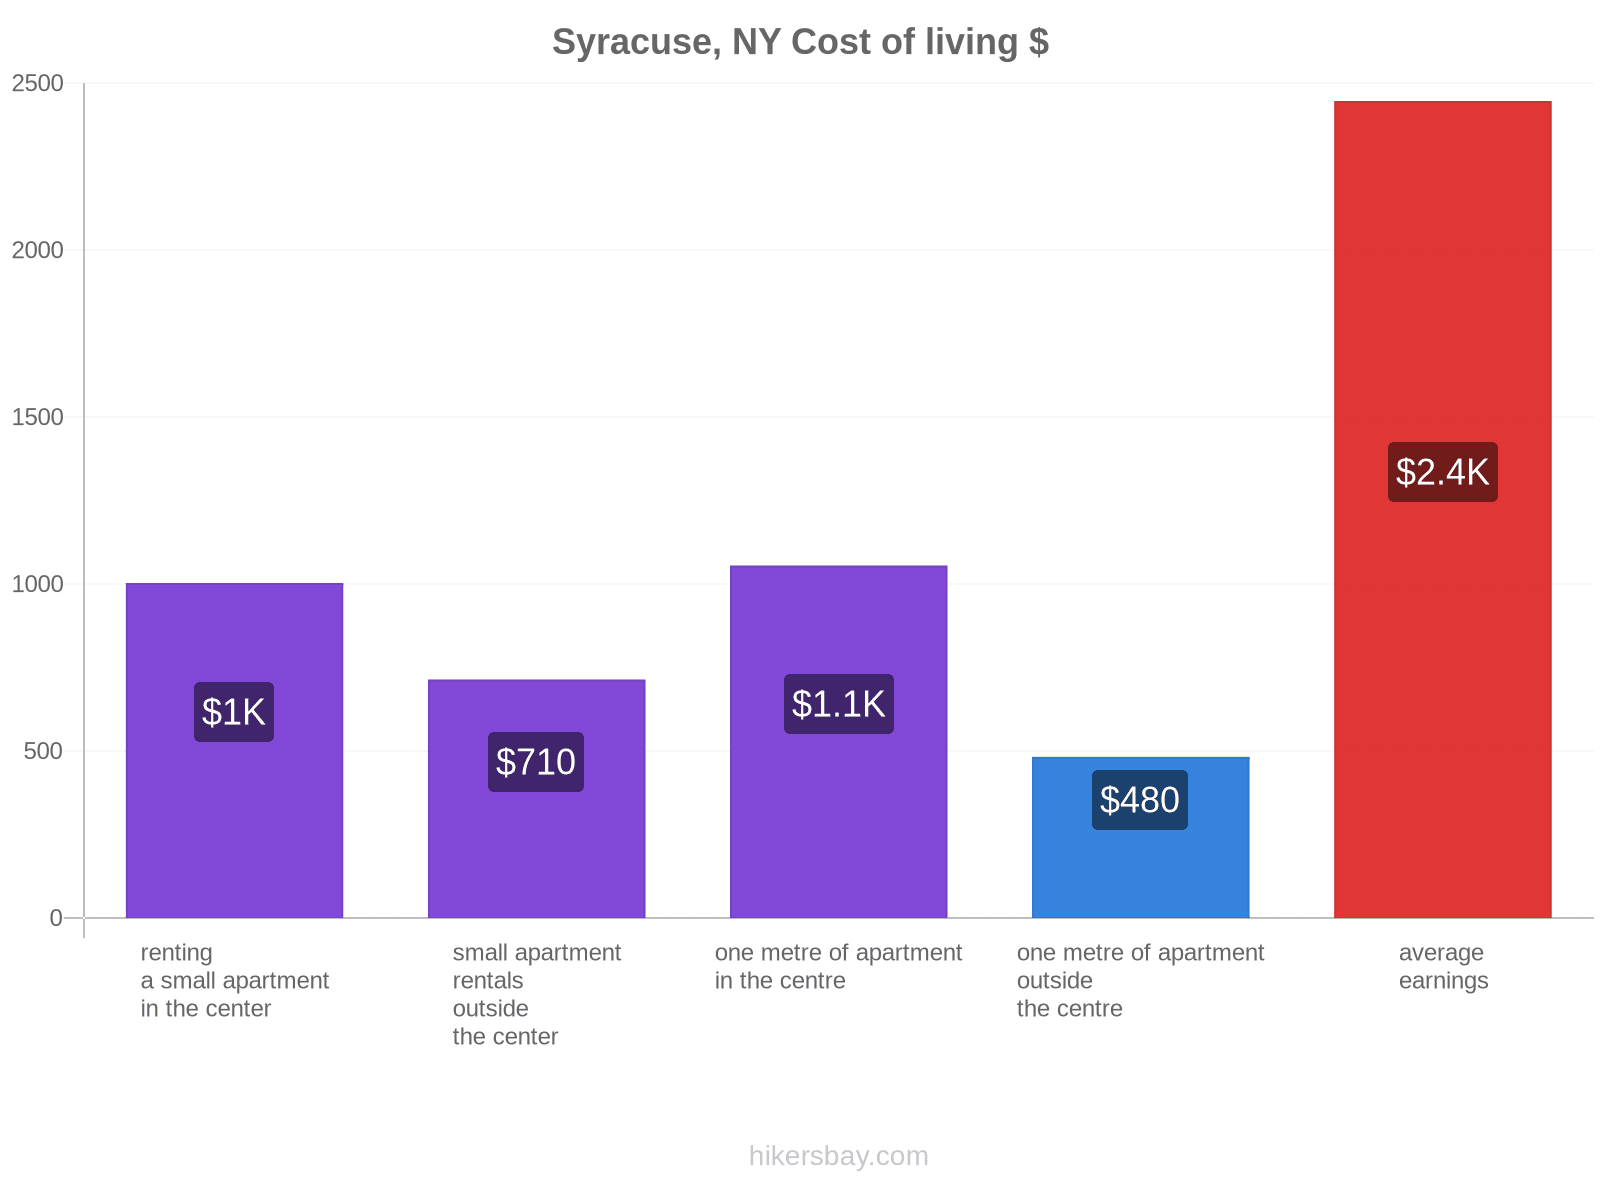 Syracuse, NY cost of living hikersbay.com